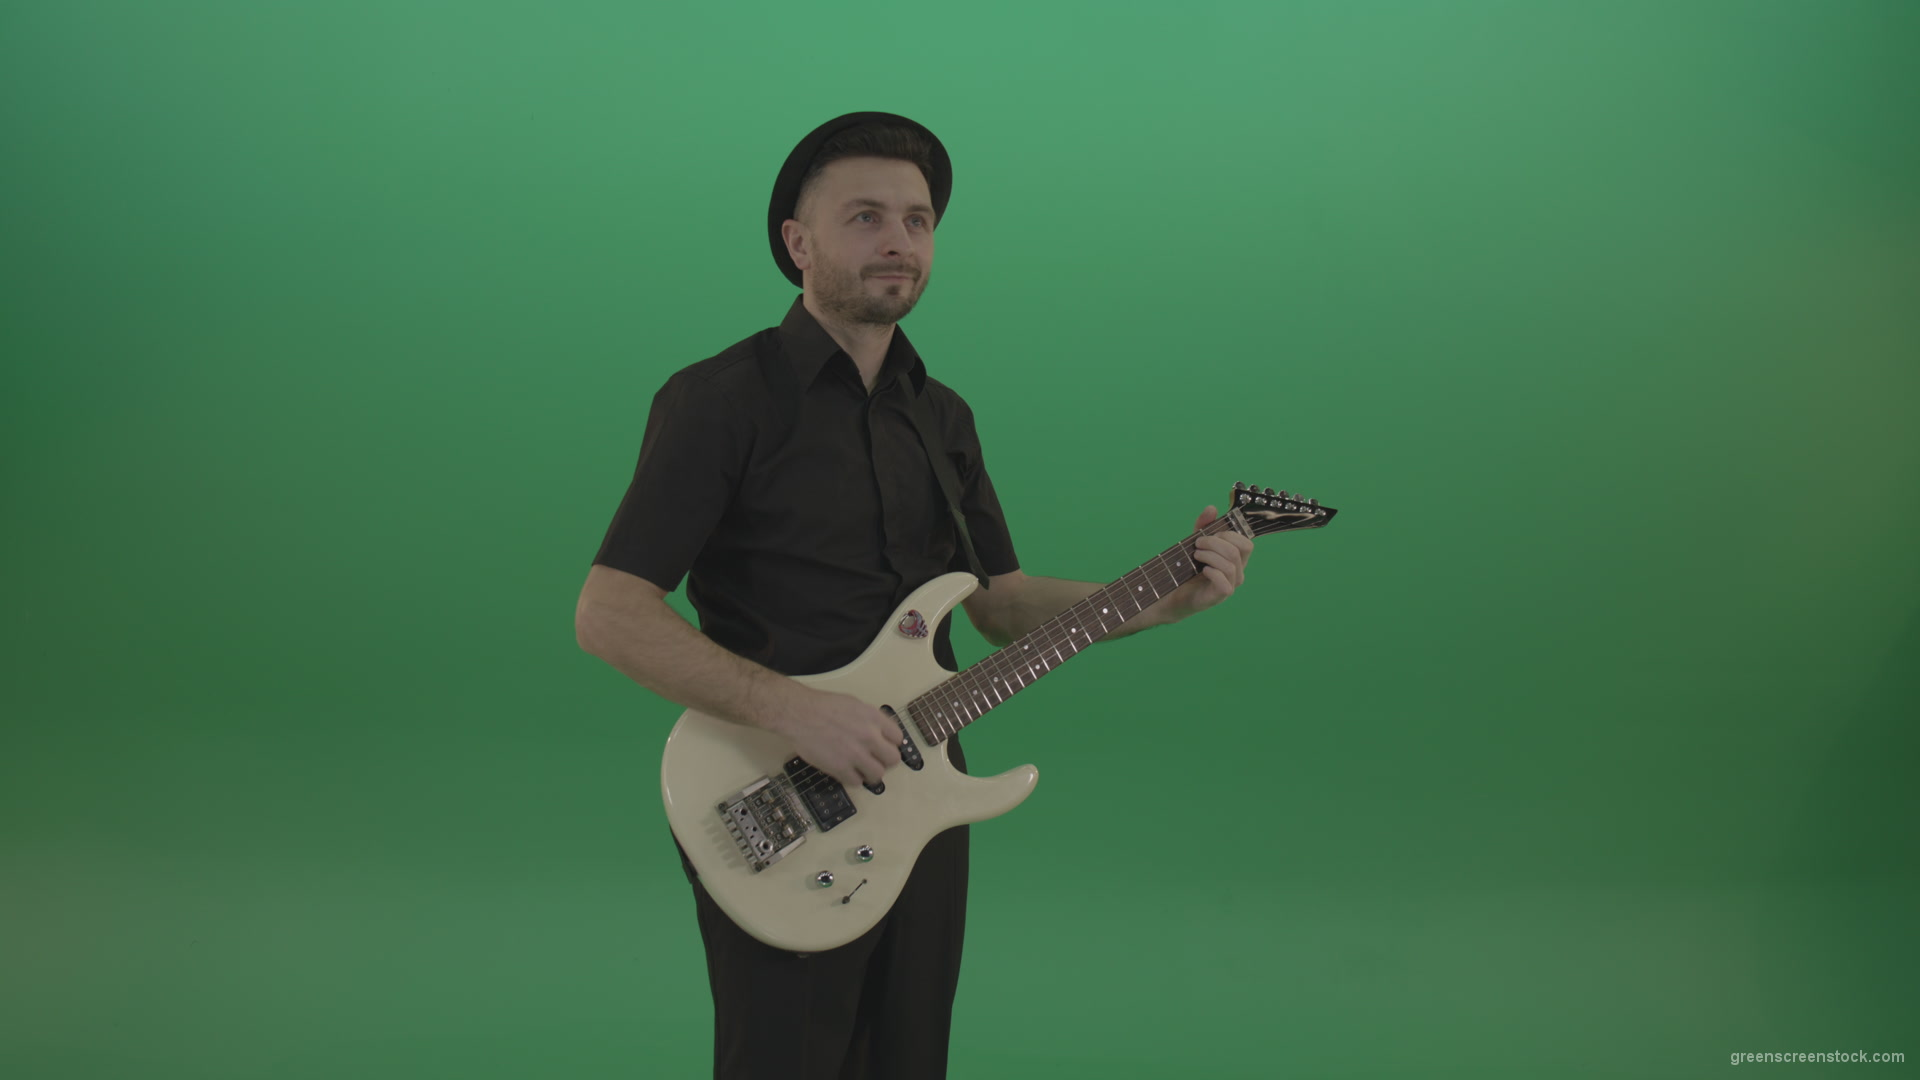 Man-in-black-playing-white-guitar-on-green-screen_006 Green Screen Stock